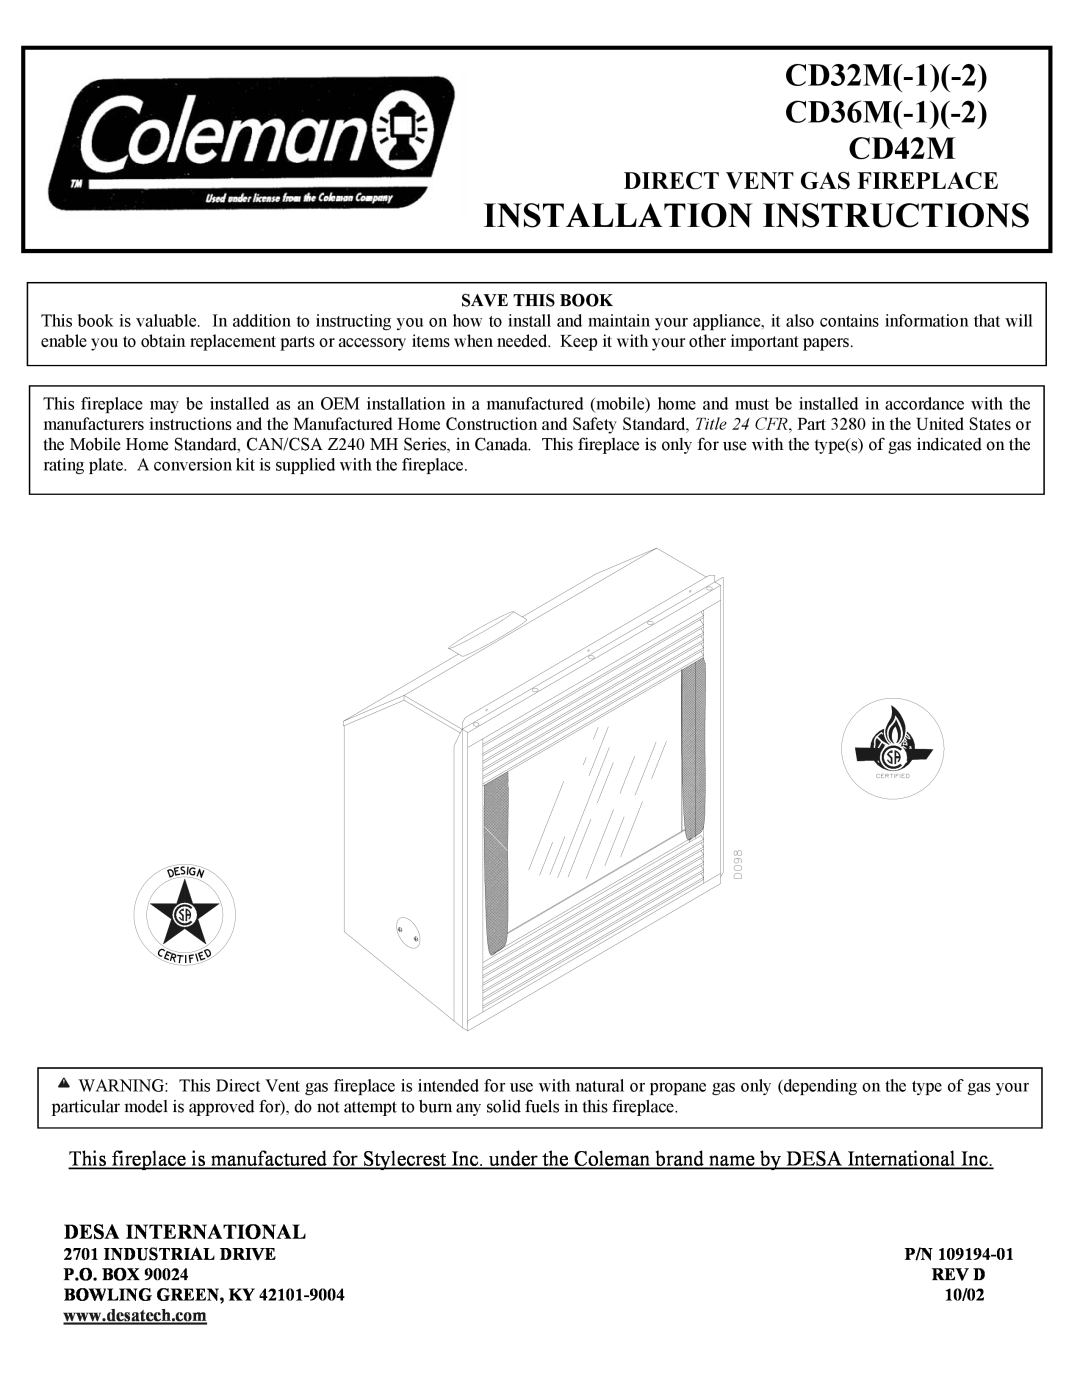 Desa installation instructions Desa International, Installation Instructions, CD32M-1-2 CD36M-1-2 CD42M, Save This Book 